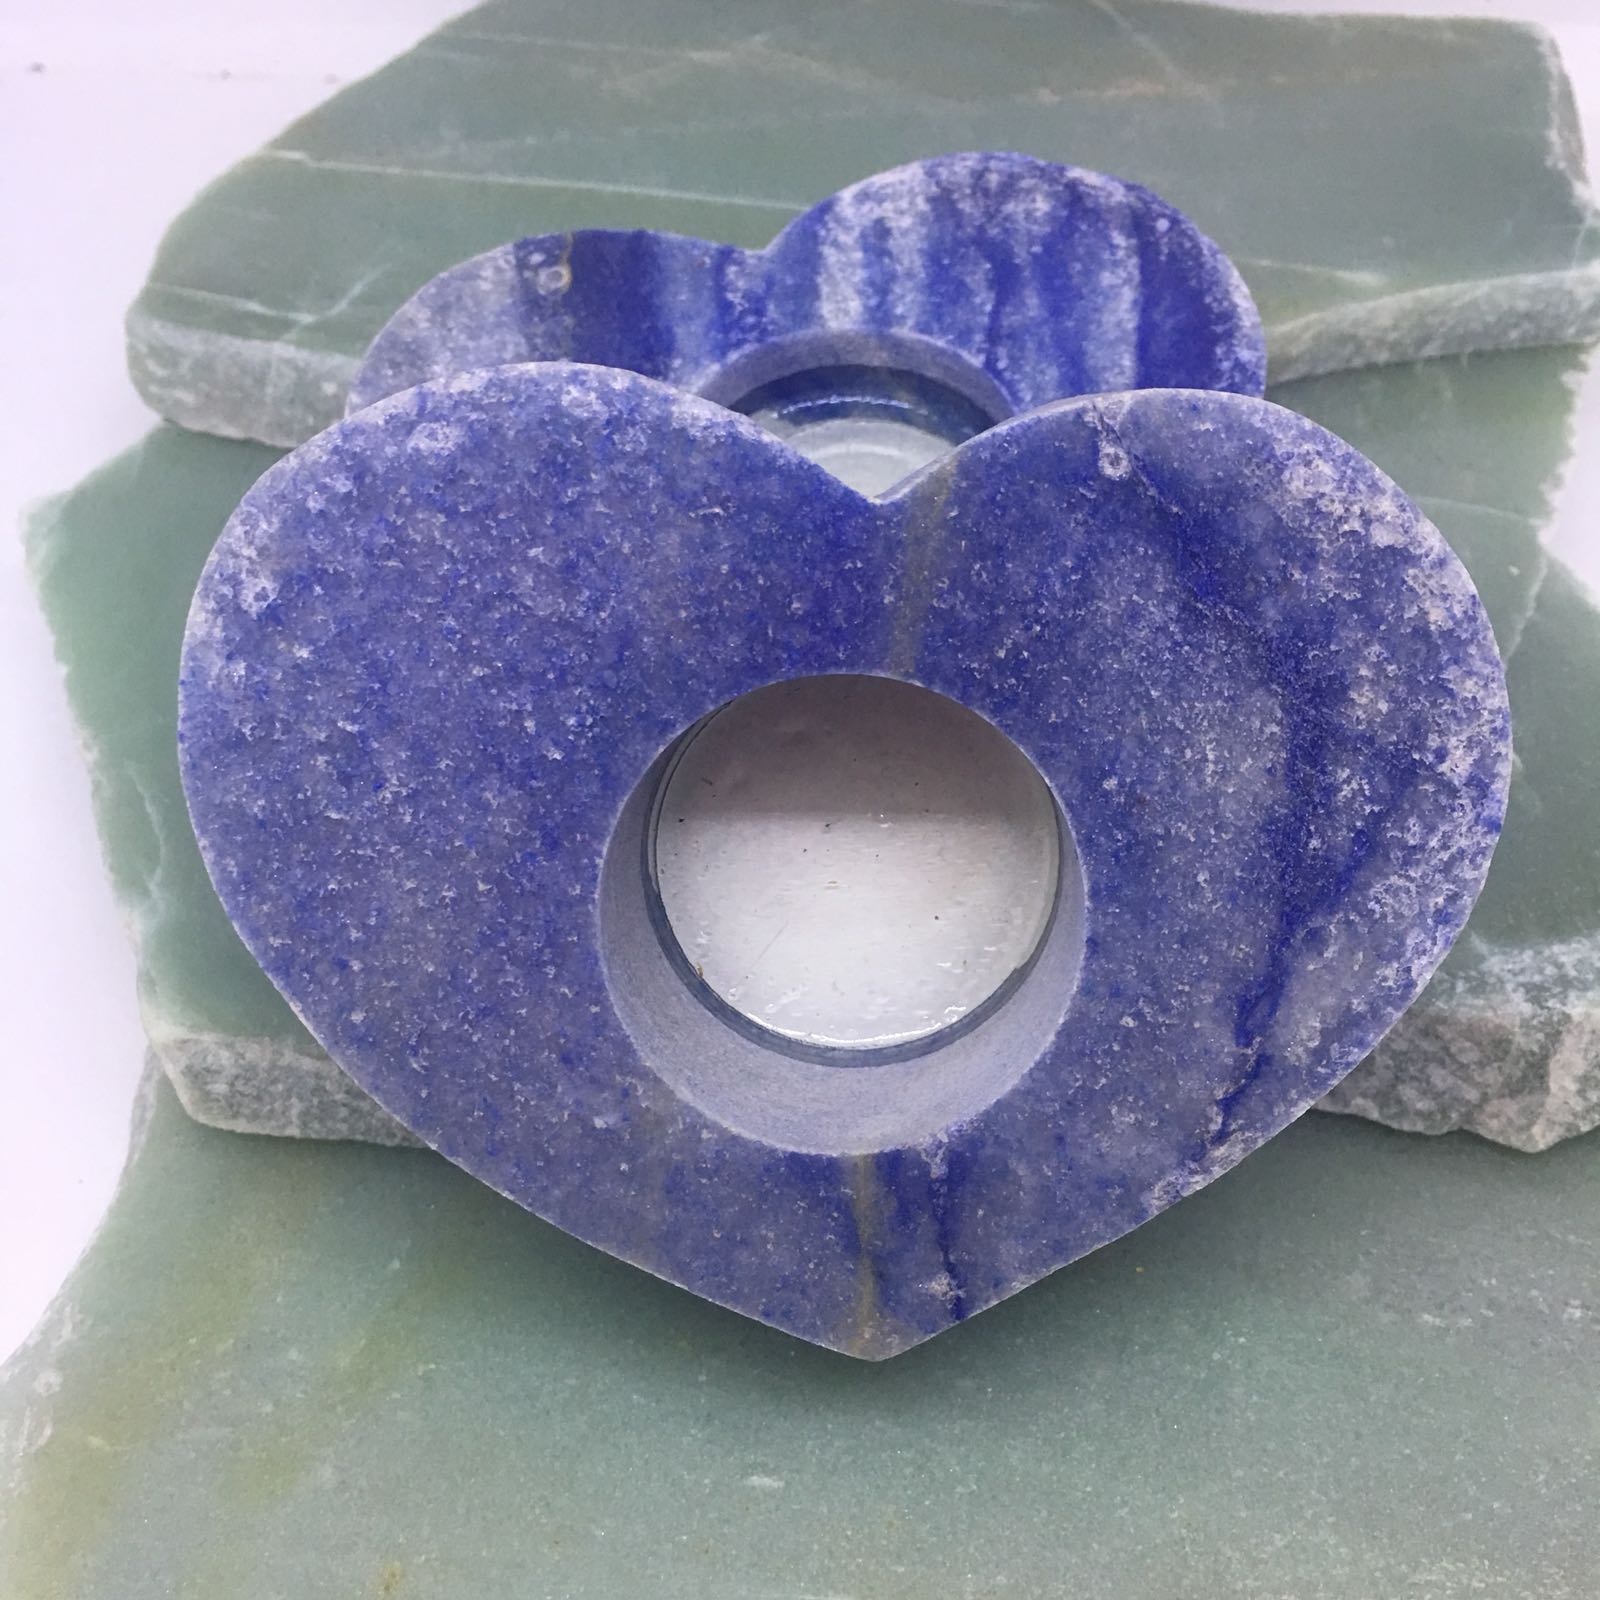 Stones from Uruguay - Blue Quartz Heart Candle Holder